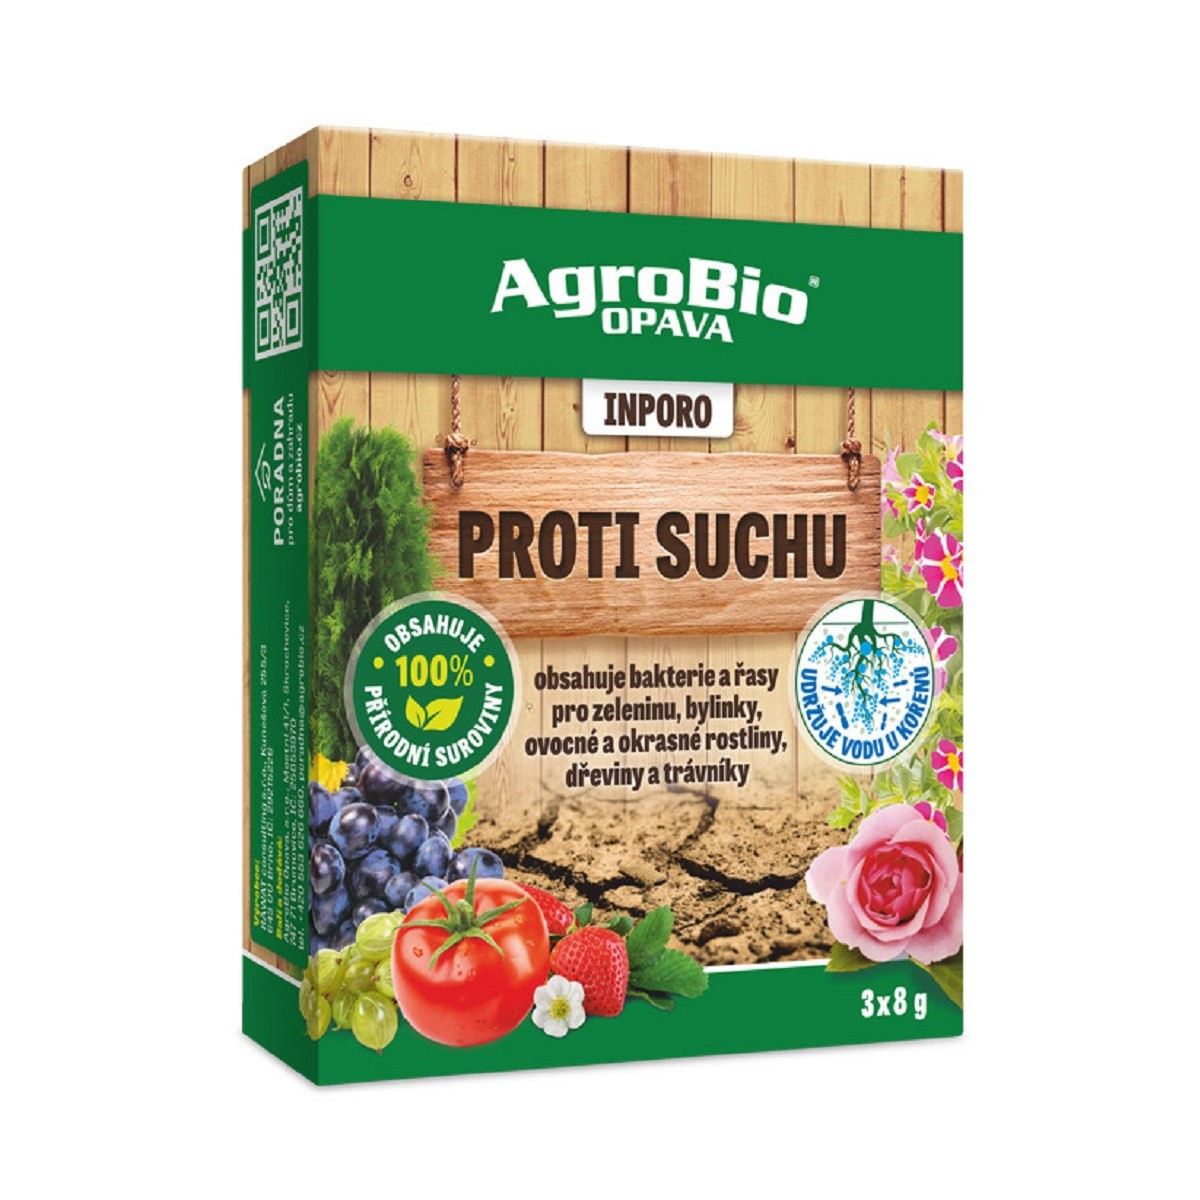 Inporo Proti suchu - AgroBio - ochrana rostlin - 3 x 8 g